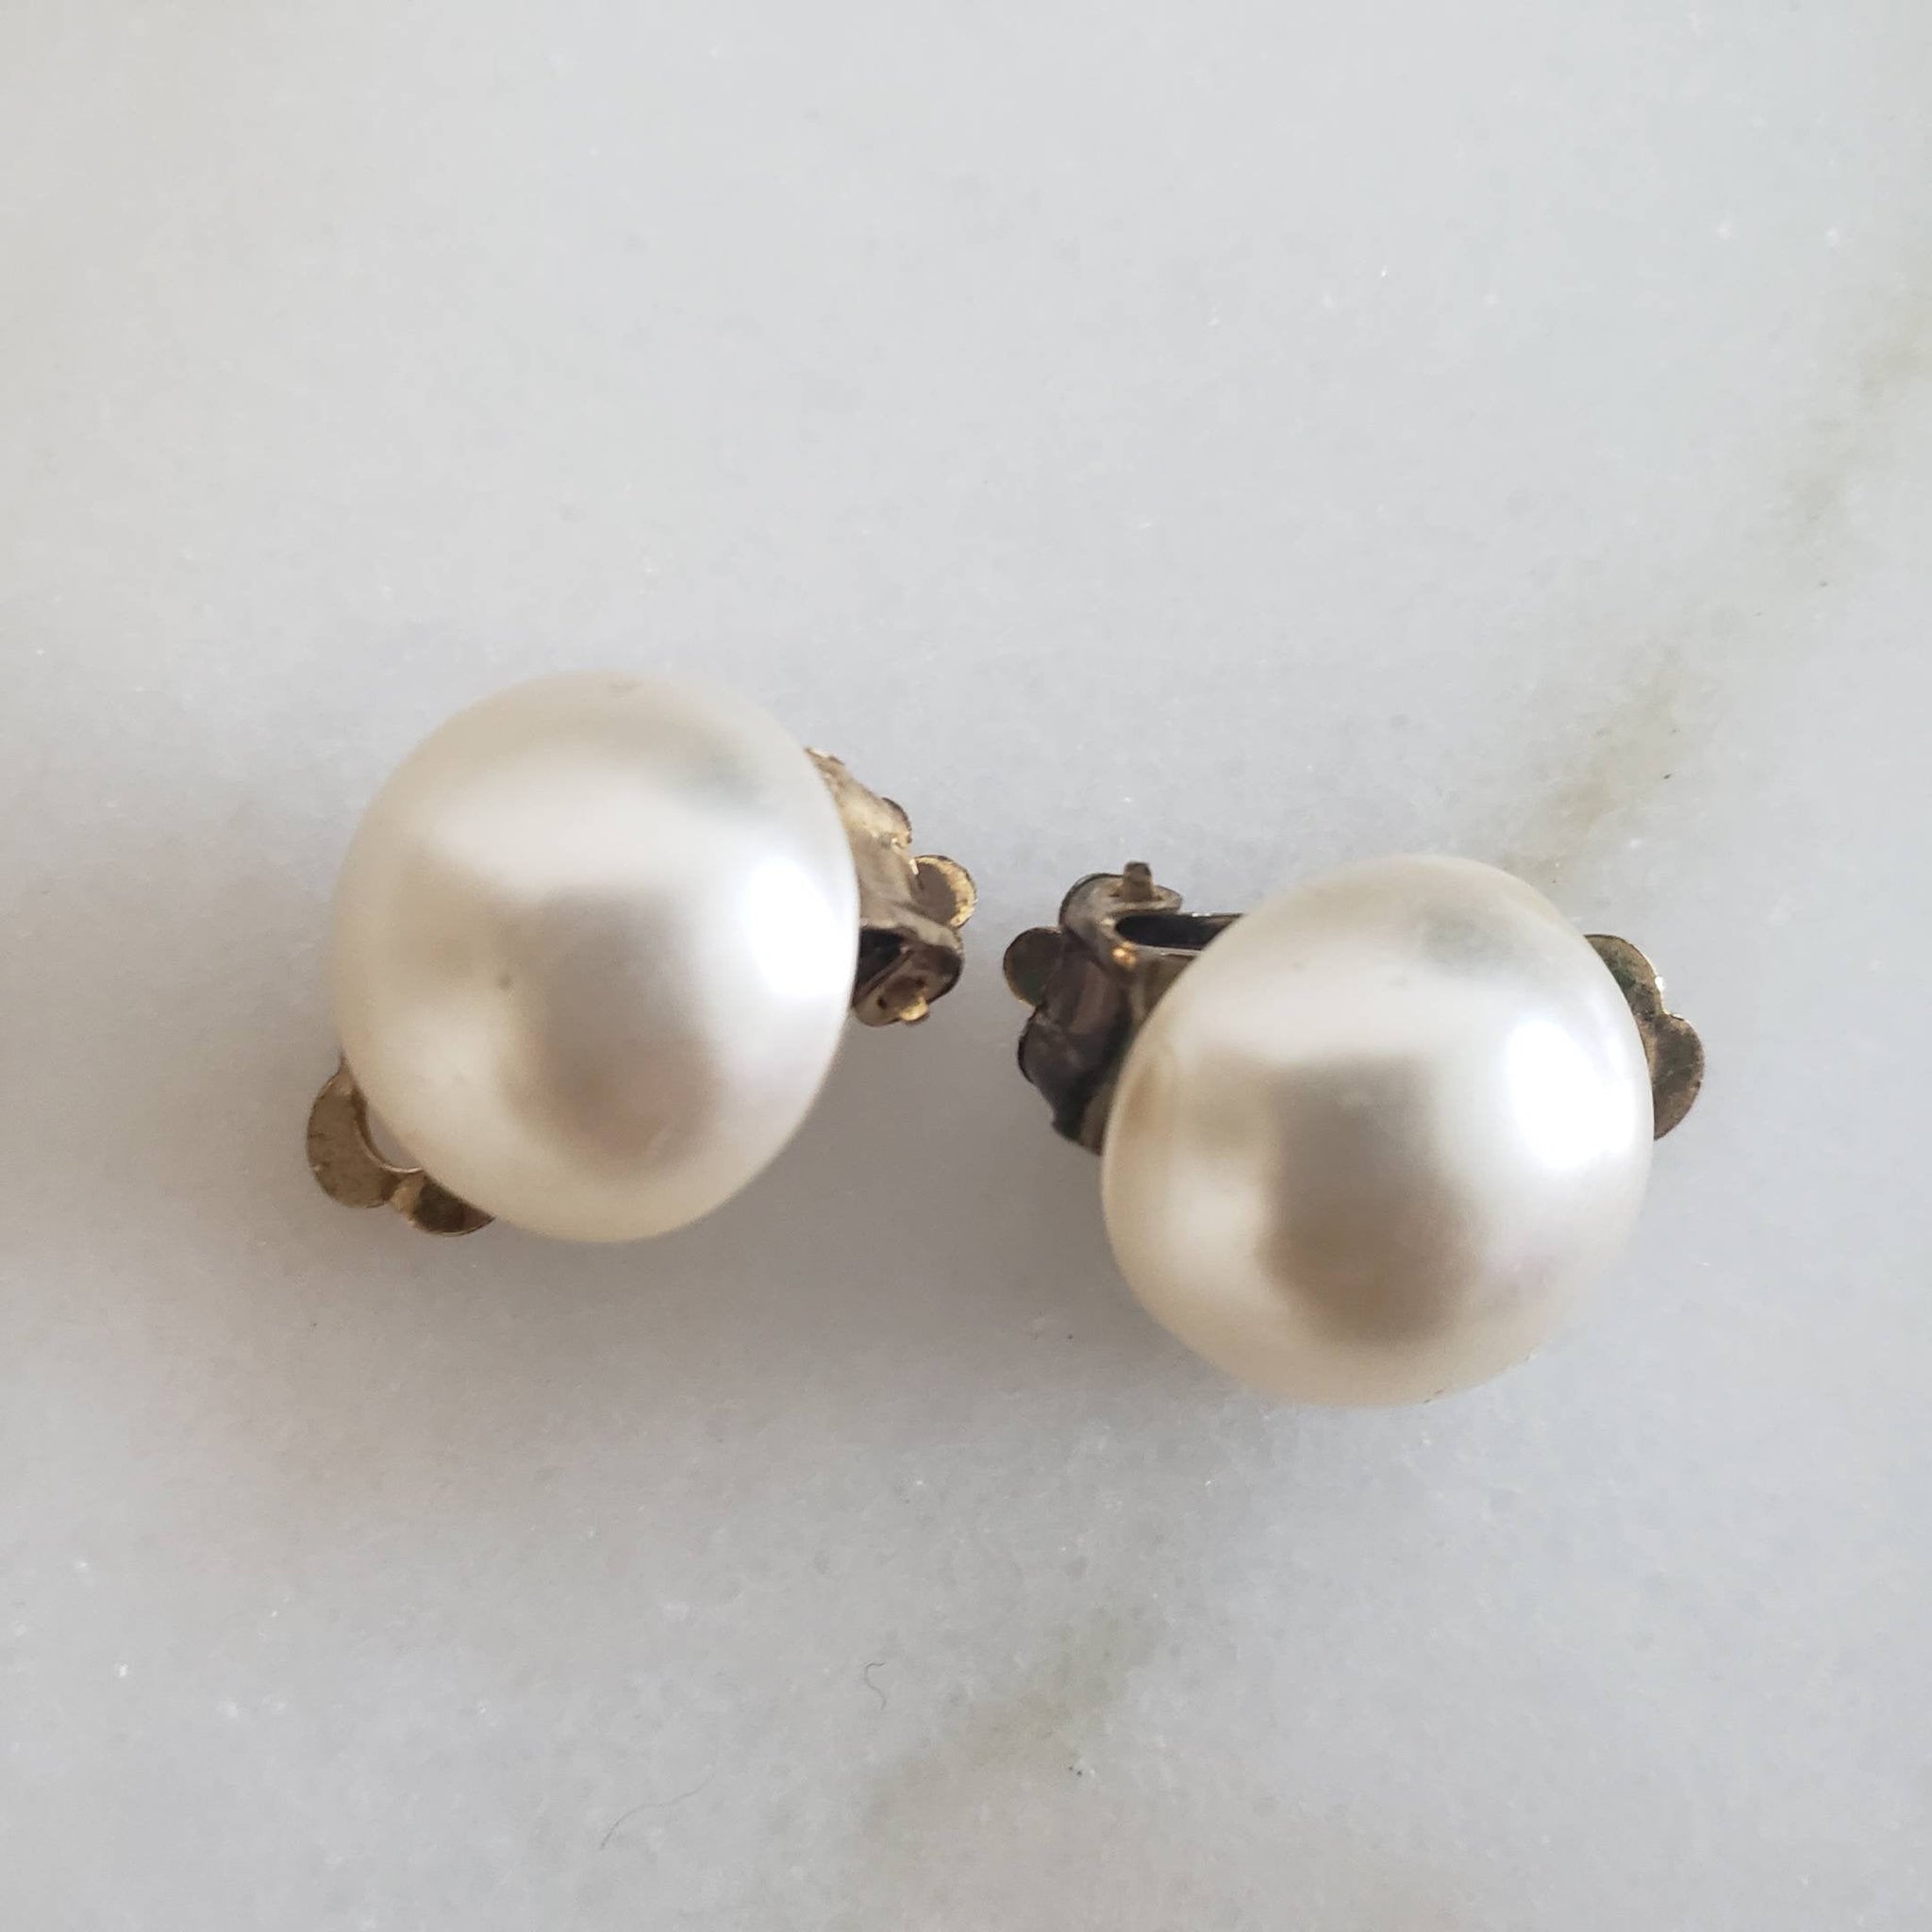 Vintage Chunky Pearl Clip On Stud Earrings - ChicCityVintage